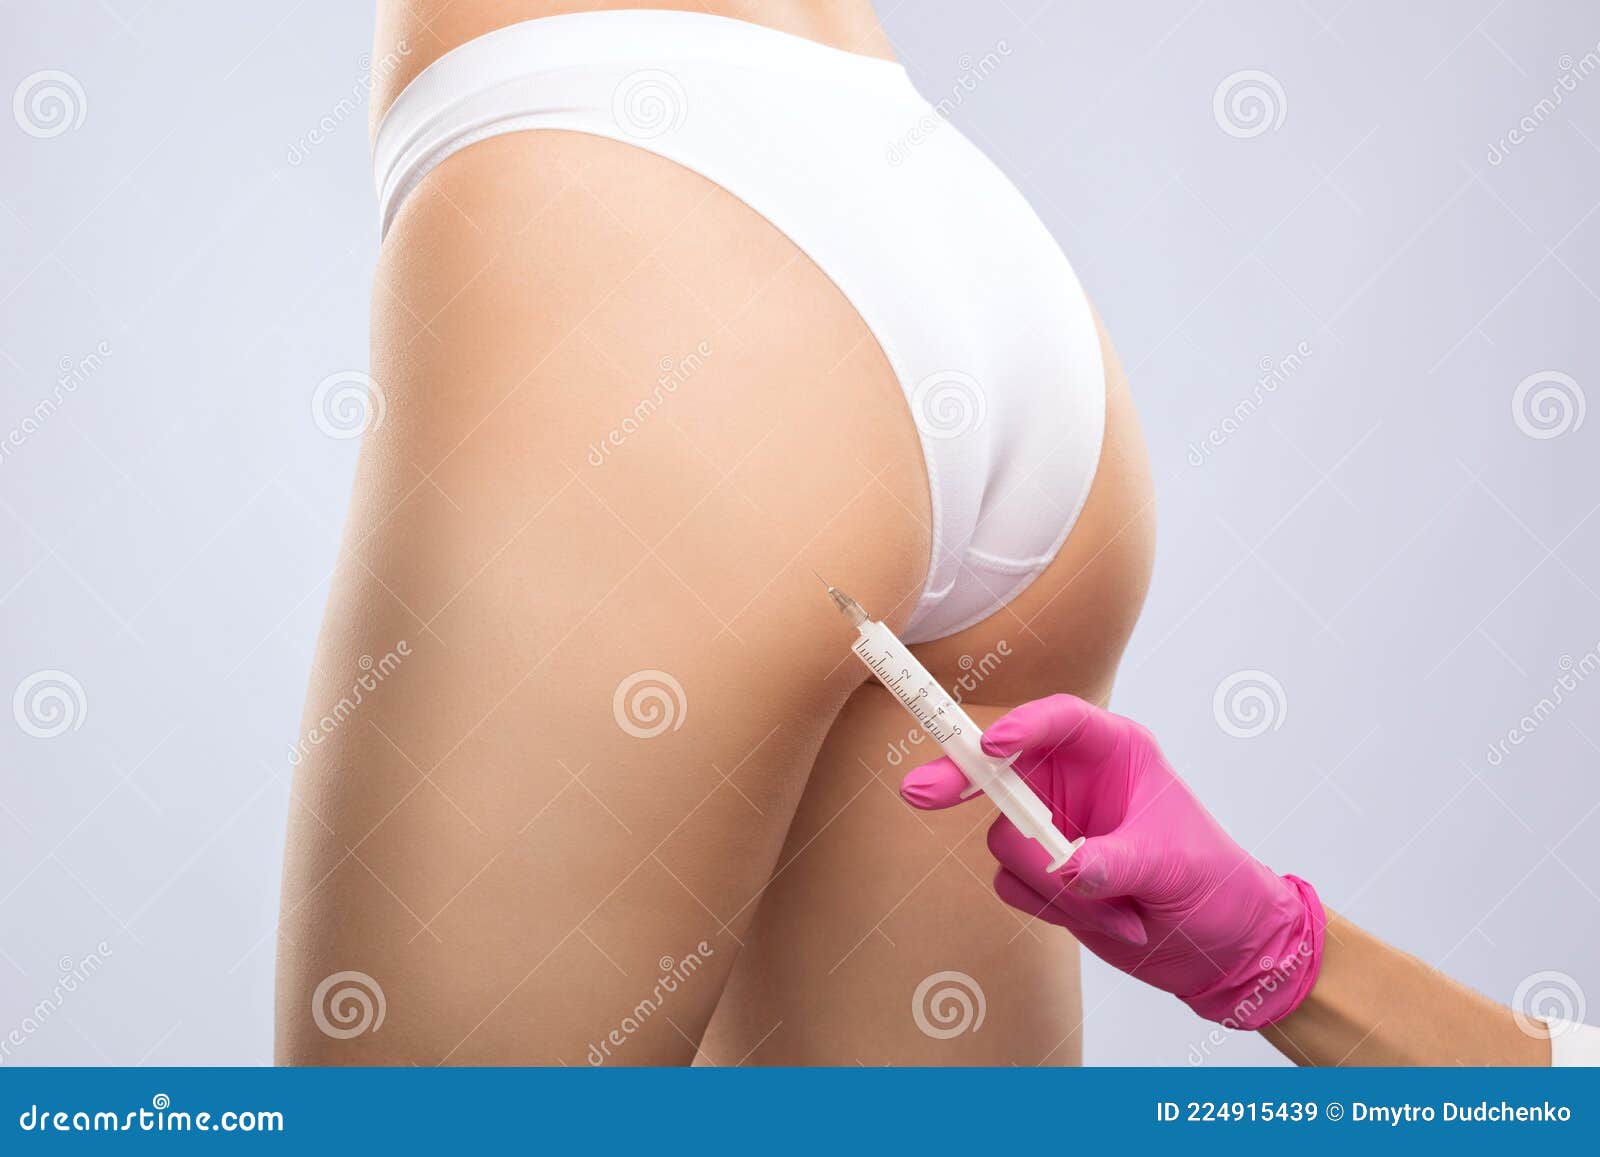 Woman Ass Injection Porn